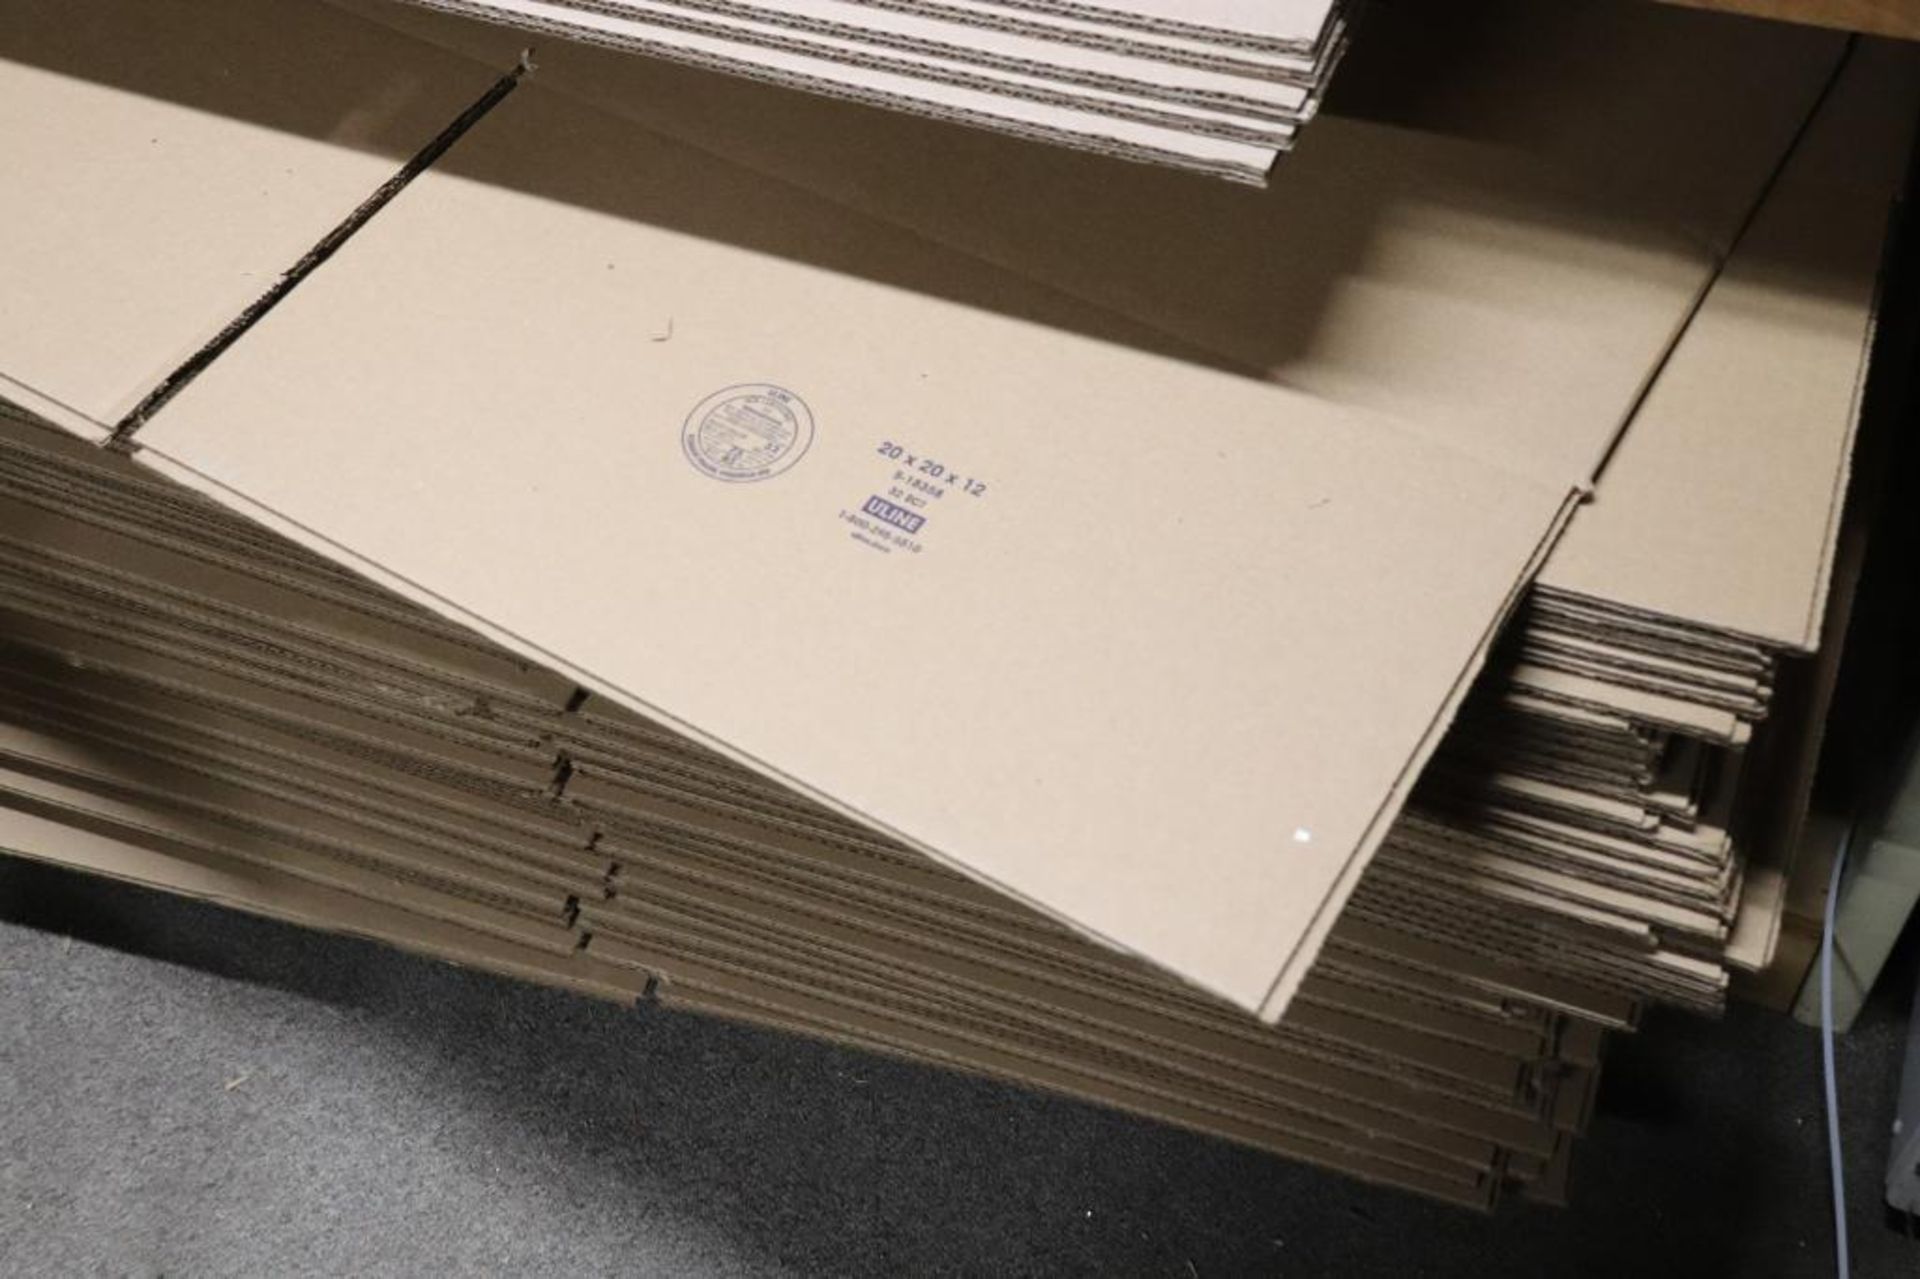 Uline cardboard boxes - Image 11 of 25